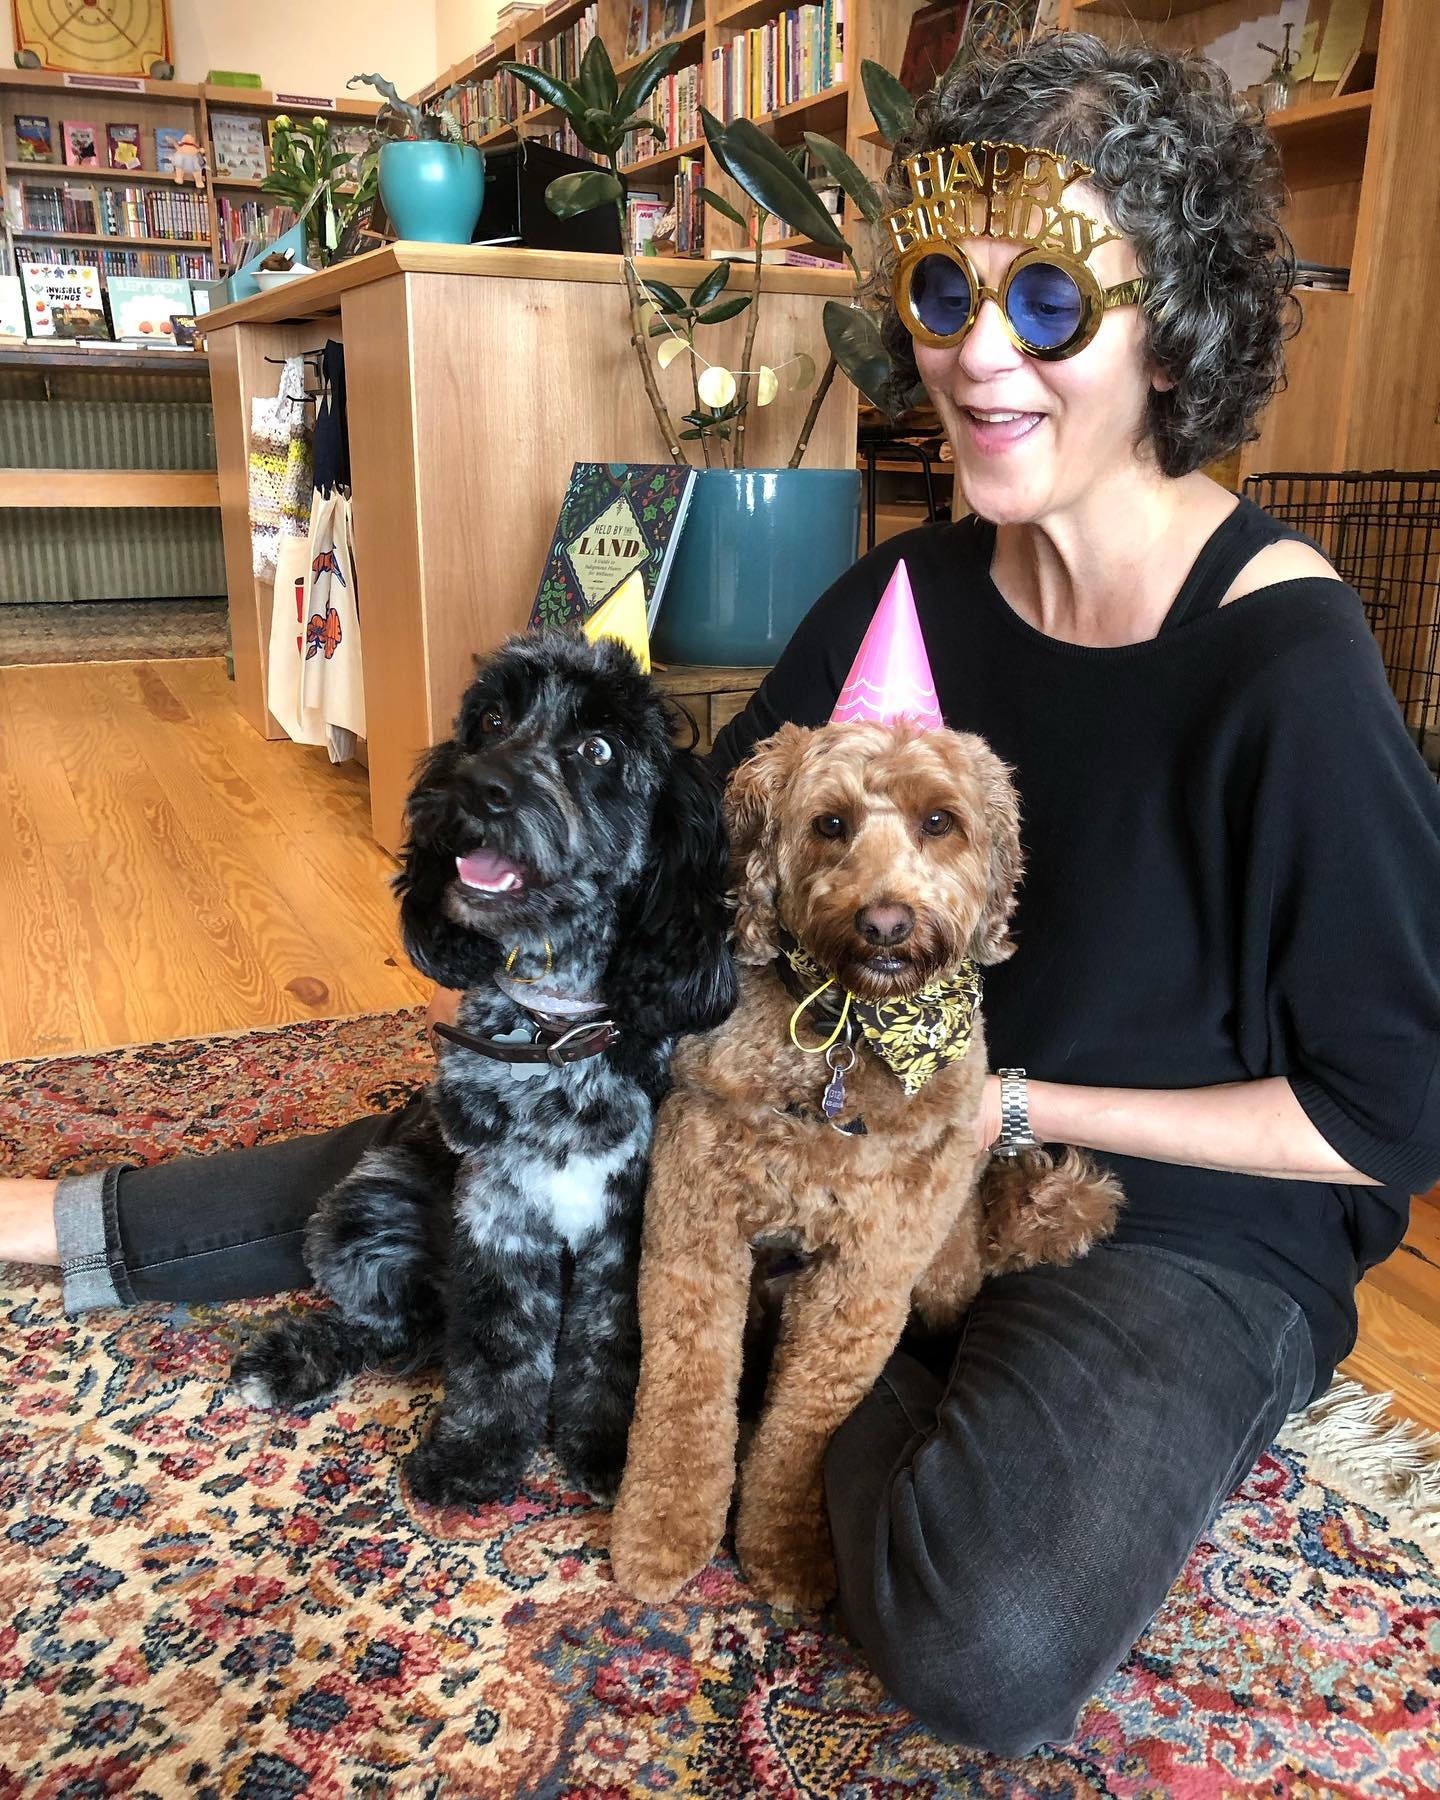 Happy Birthday to Opal and Birdie, shop dog extraordinaries! 💕🥳

****

#glendorabookshopmi #independentbookshop #indiebookshop #shopdogs #opalandbirdie #dogparty #cockapoo